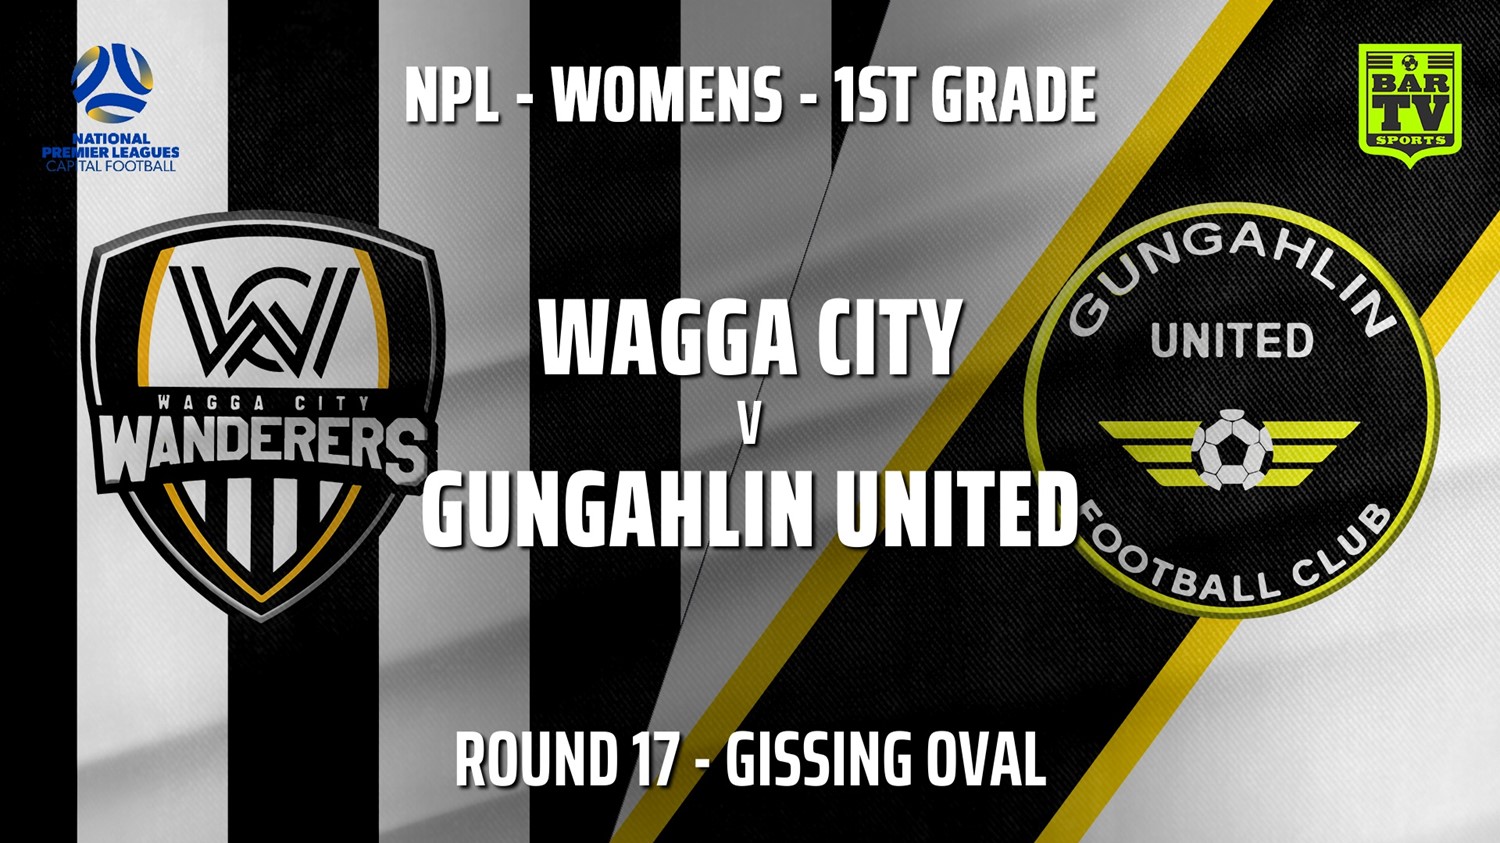 210808-Capital Womens Round 17 - Wagga City Wanderers FC (women) v Gungahlin United FC (women) Minigame Slate Image